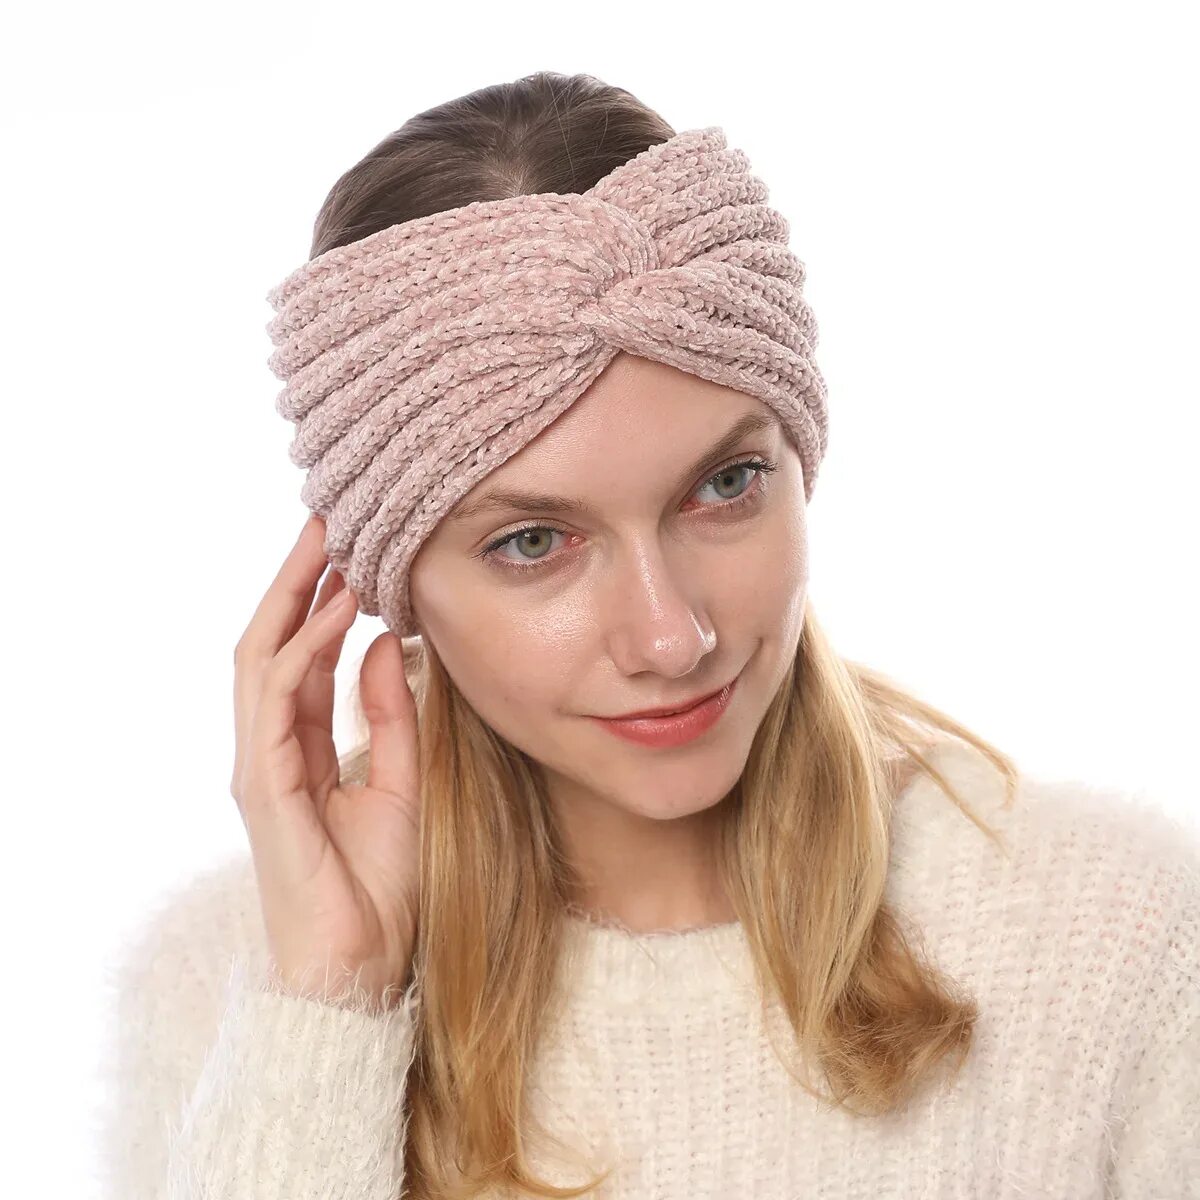 Широкая повязка на голову. Повязка на голову вязаная. Вязаные повязки на голову для женщин. Повязка на голову вязаная розовая. Красивые повязки на голову спицами.